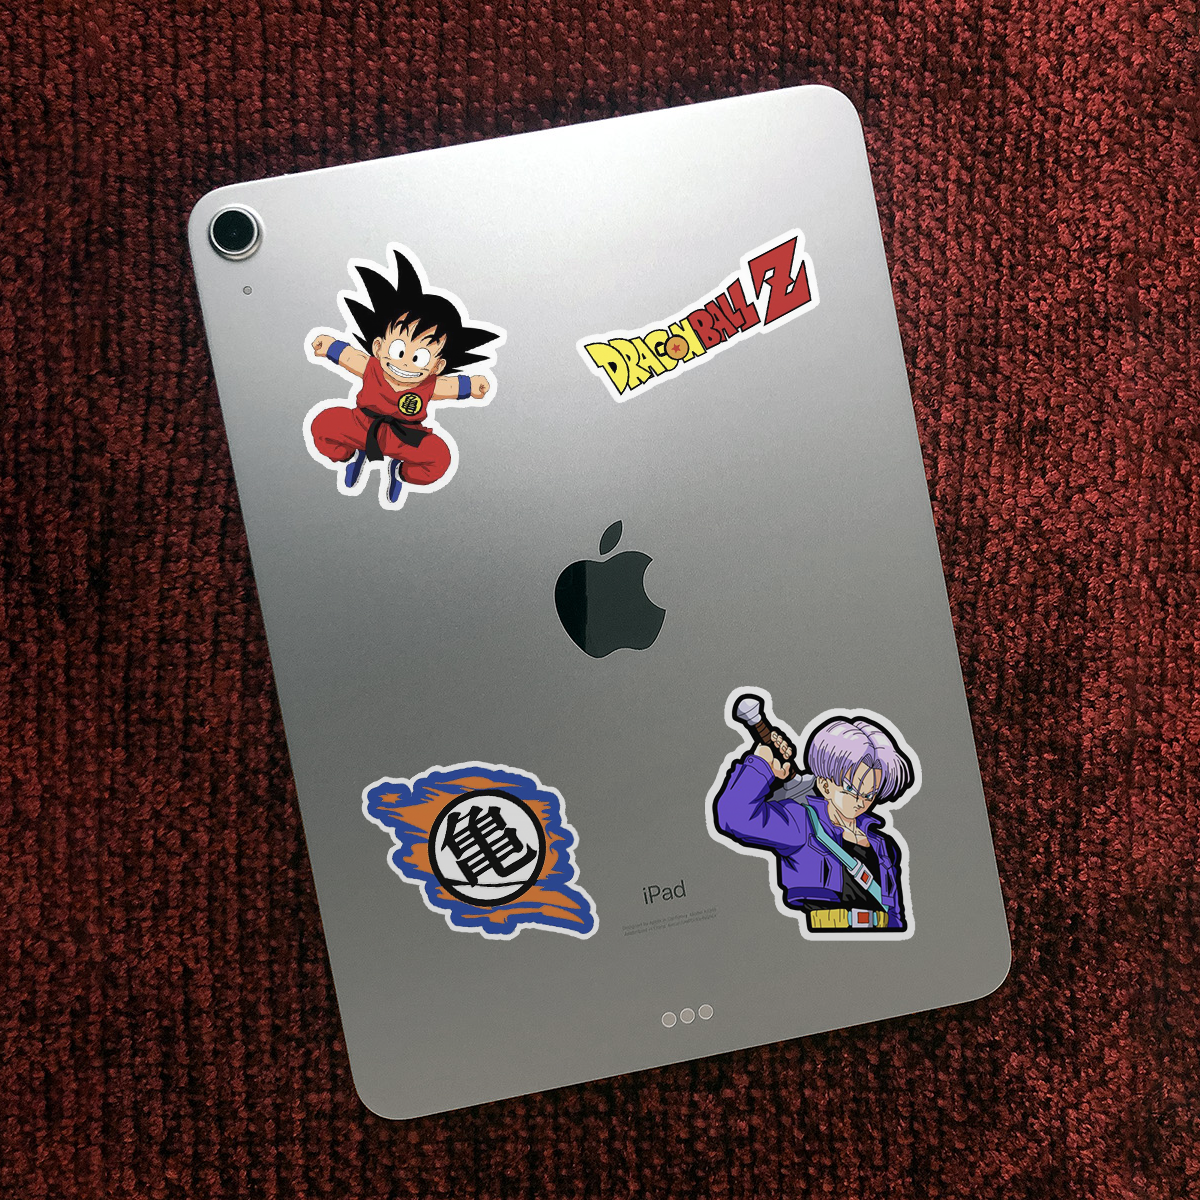 Tiyi Dragon Ball Z Stickers,100PCS Anime Vinyl Stickers India